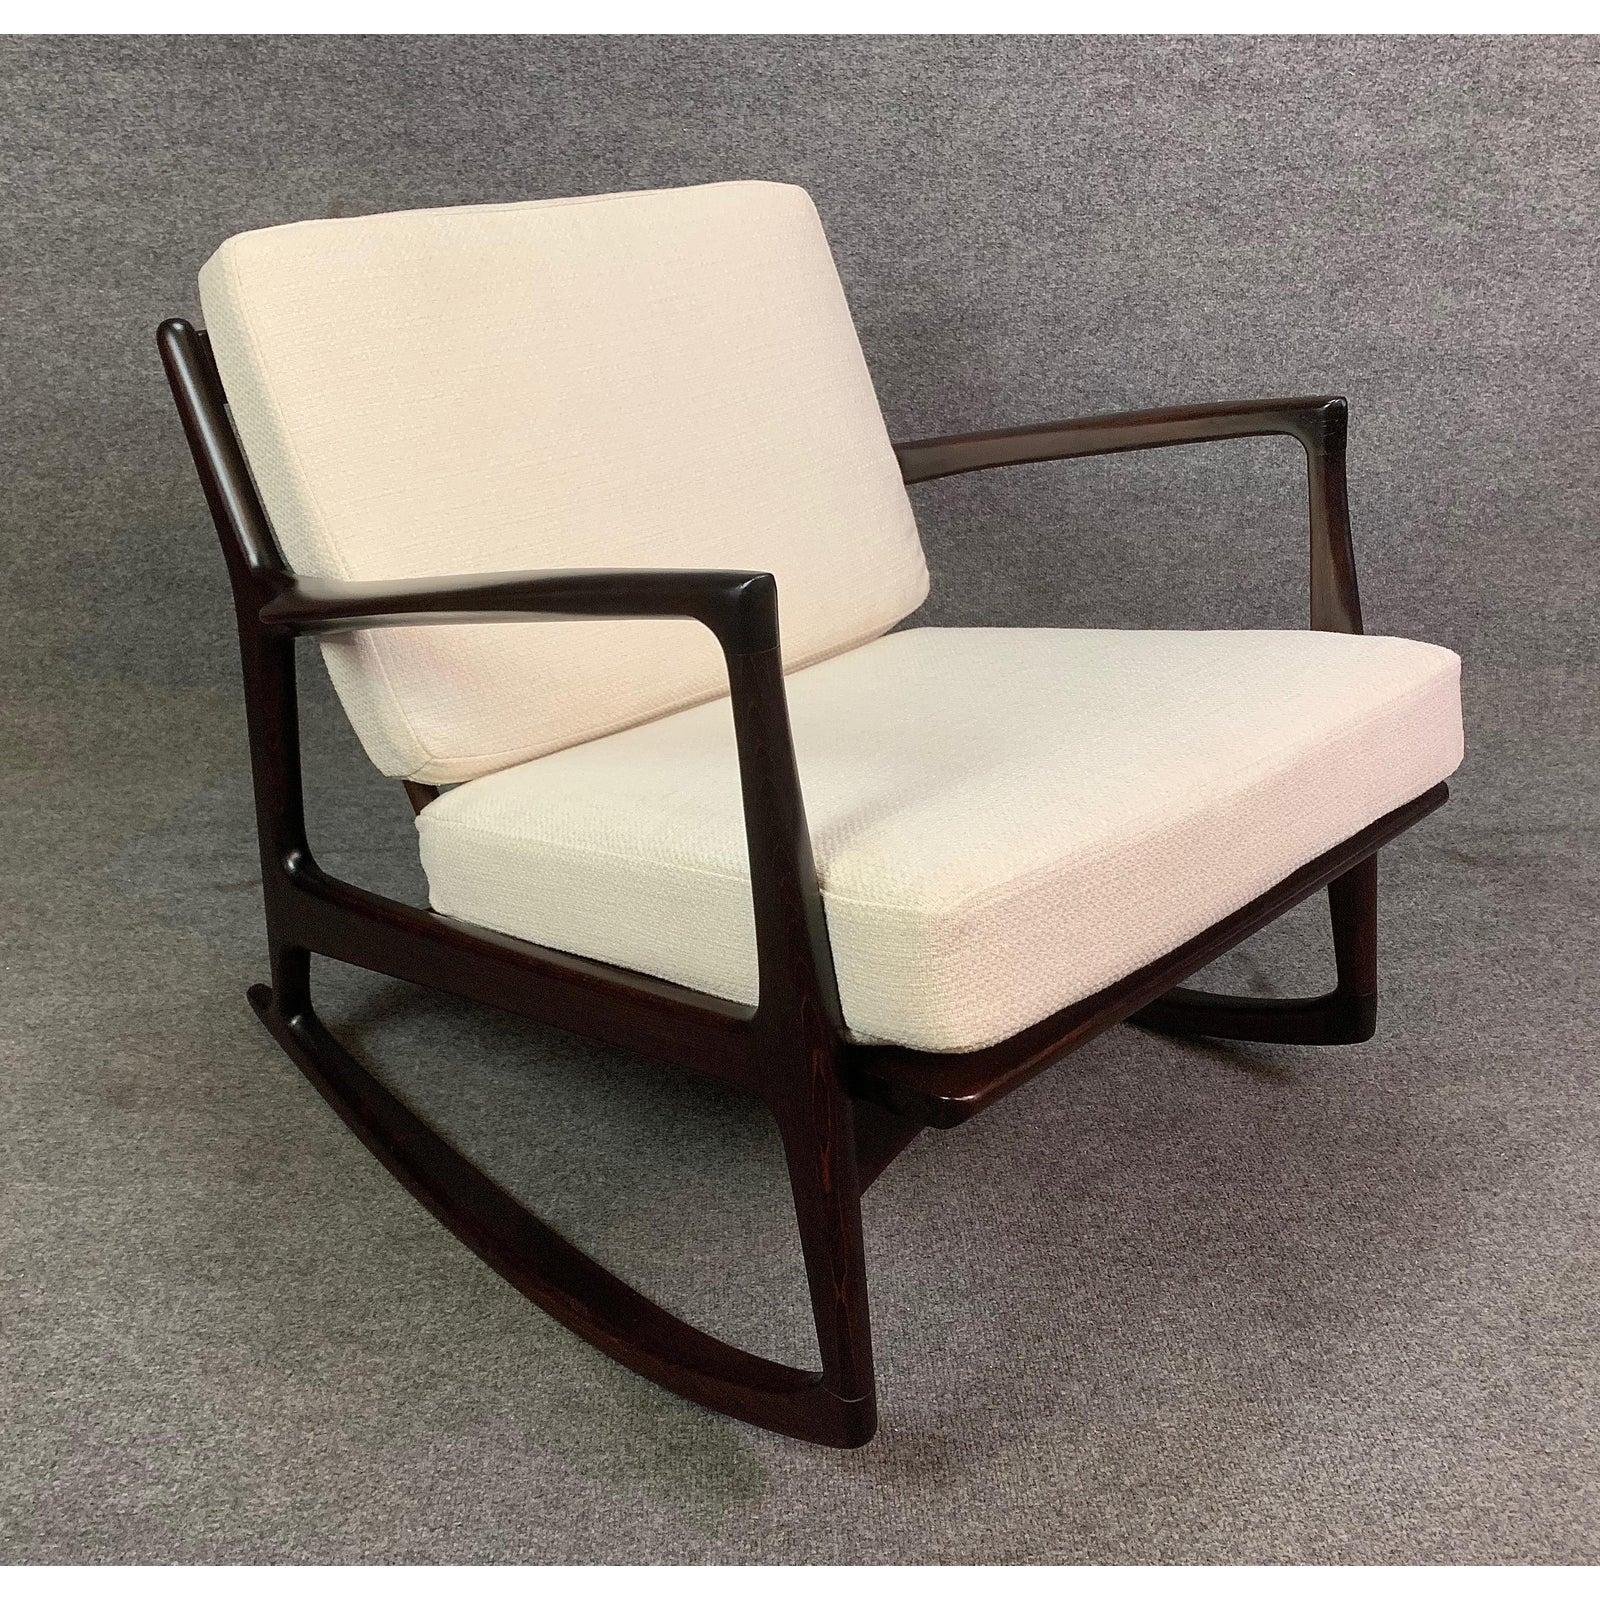 Scandinavian Modern Vintage Danish Mid-Century Modern Rocking Chair by Kofod Larsen for Selig For Sale